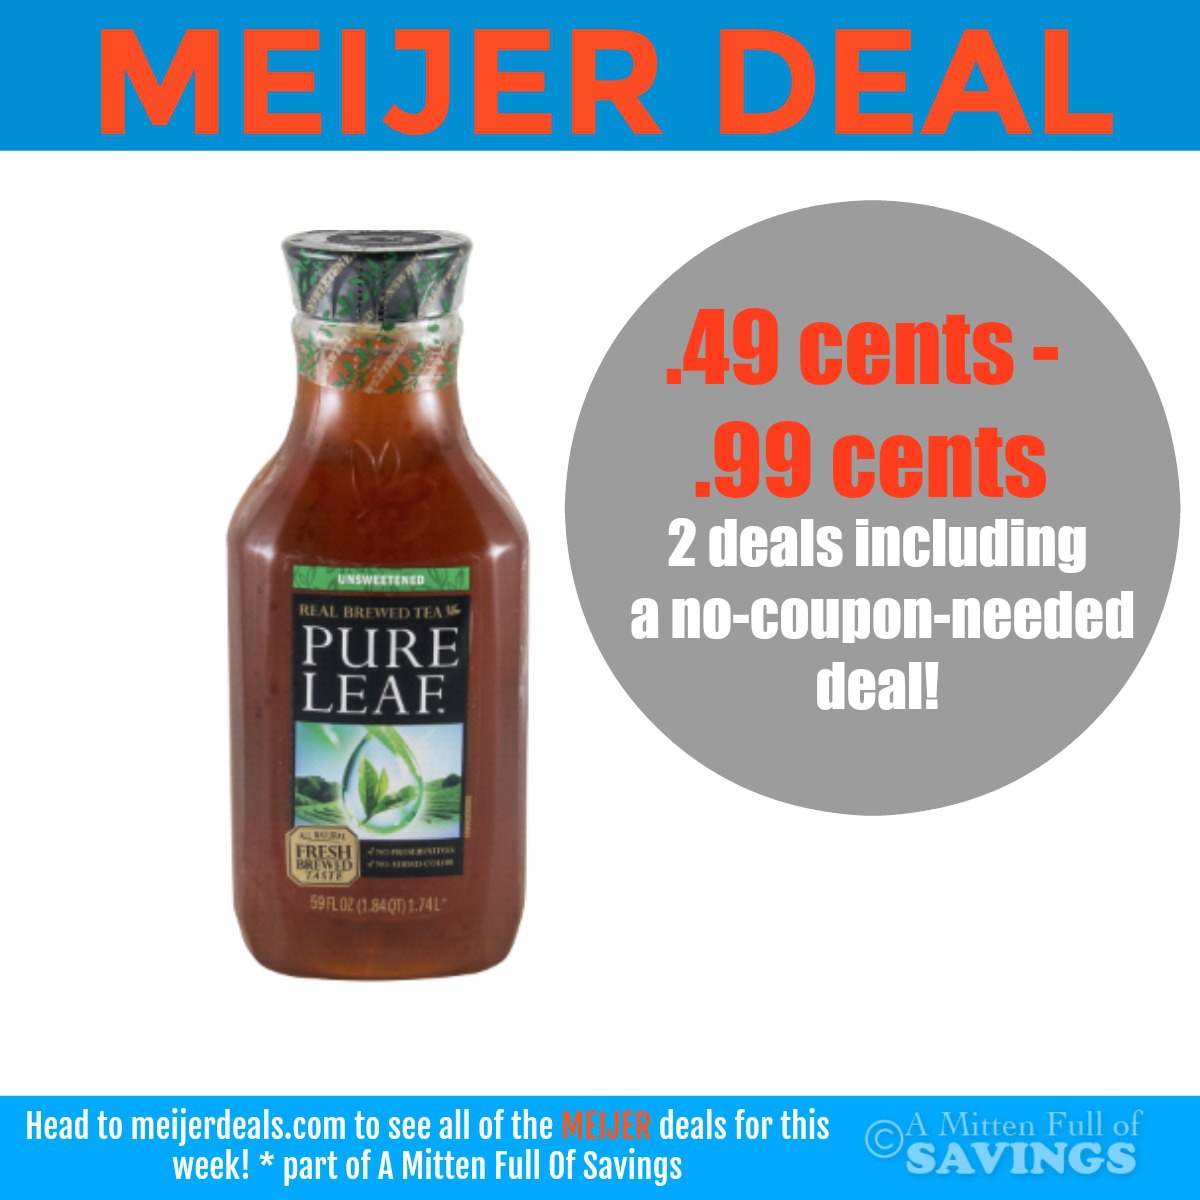 Deal on Pure Leaf Tea at Meijer